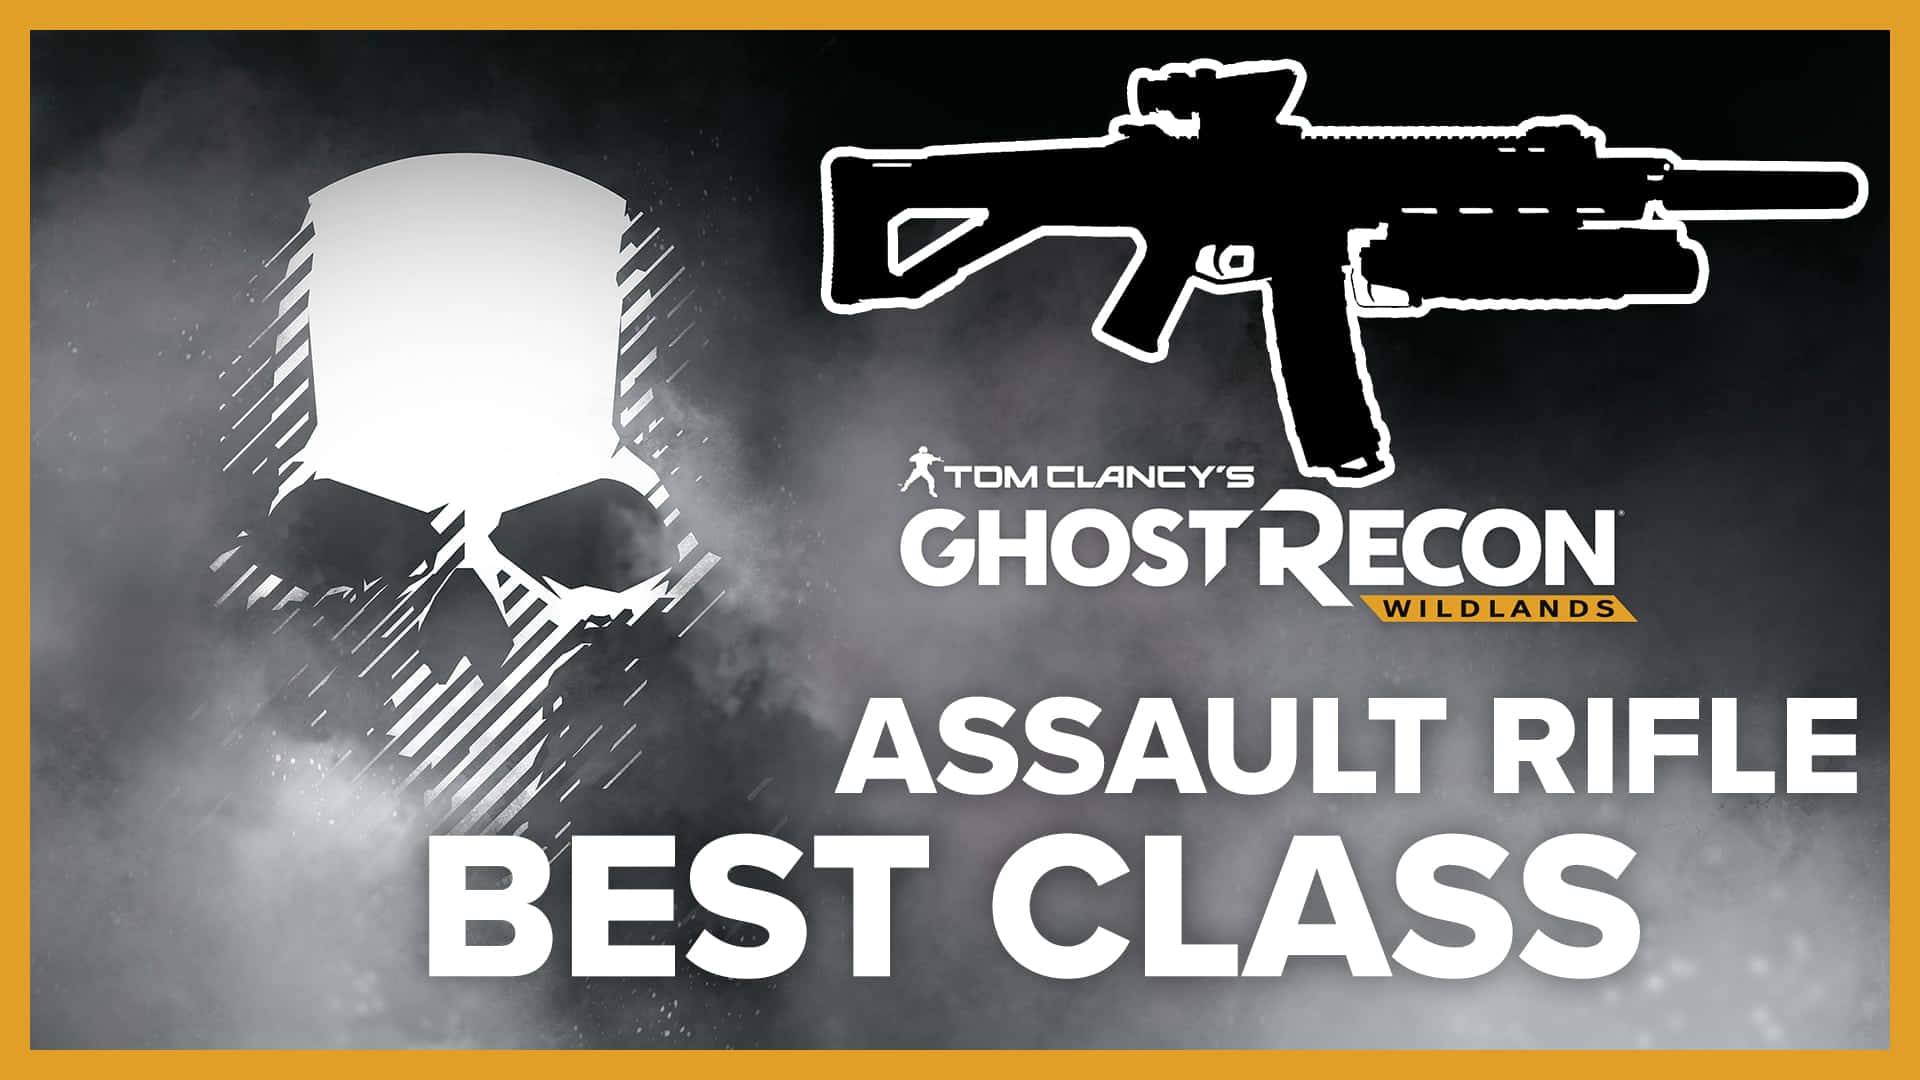 Hd Ghost Recon Wildlands Background Assault Rifle Best Class Illustration